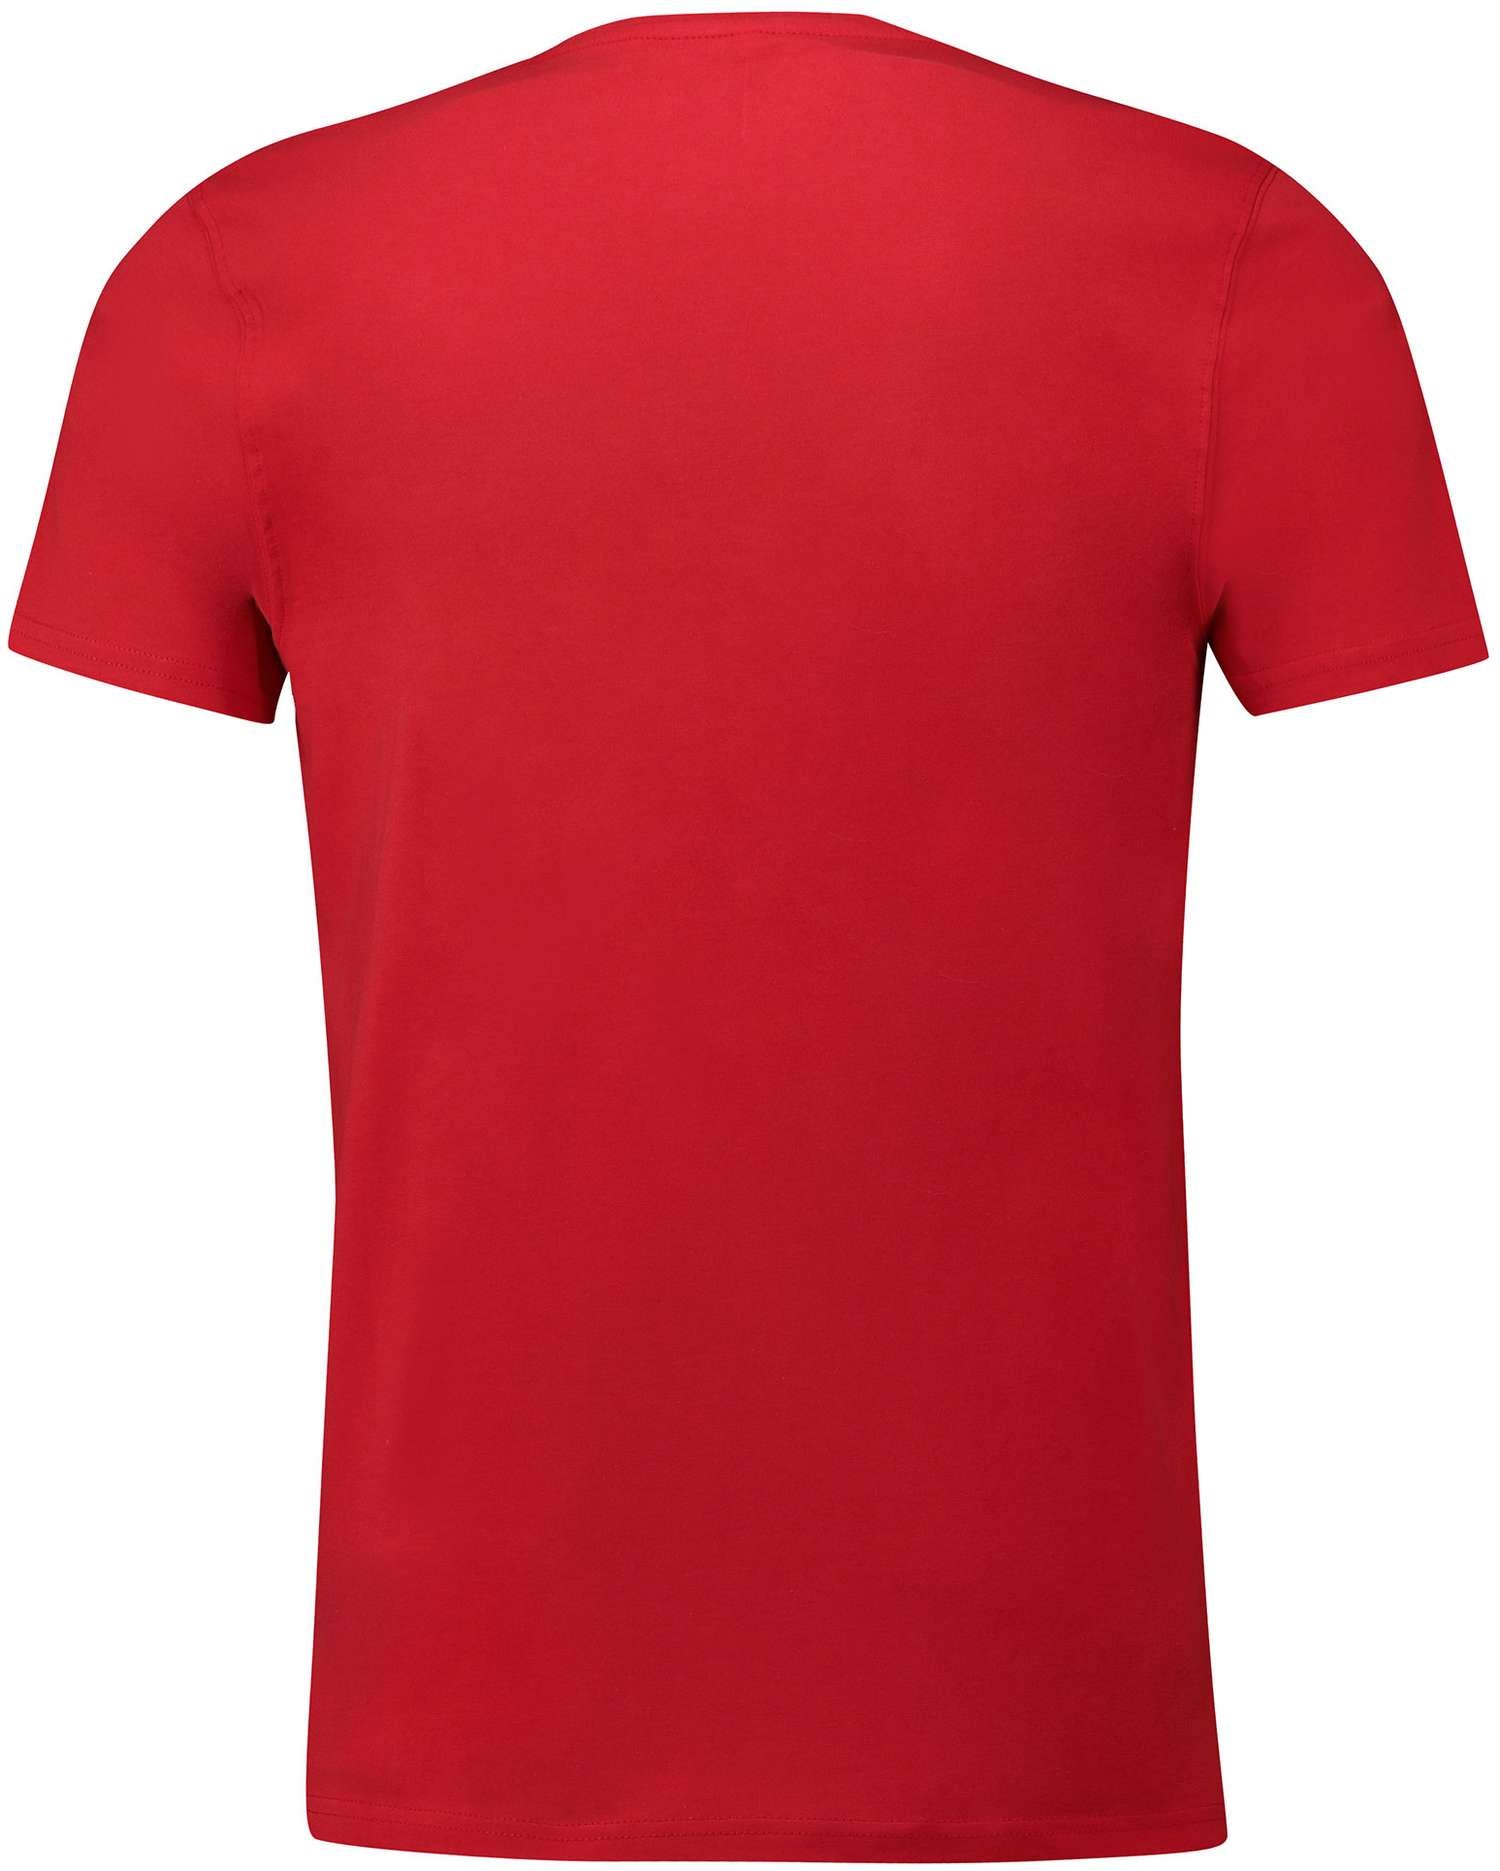 Fanatics - NHL Detroit Red Wings Graphic Wordmark T-Shirt - Rot